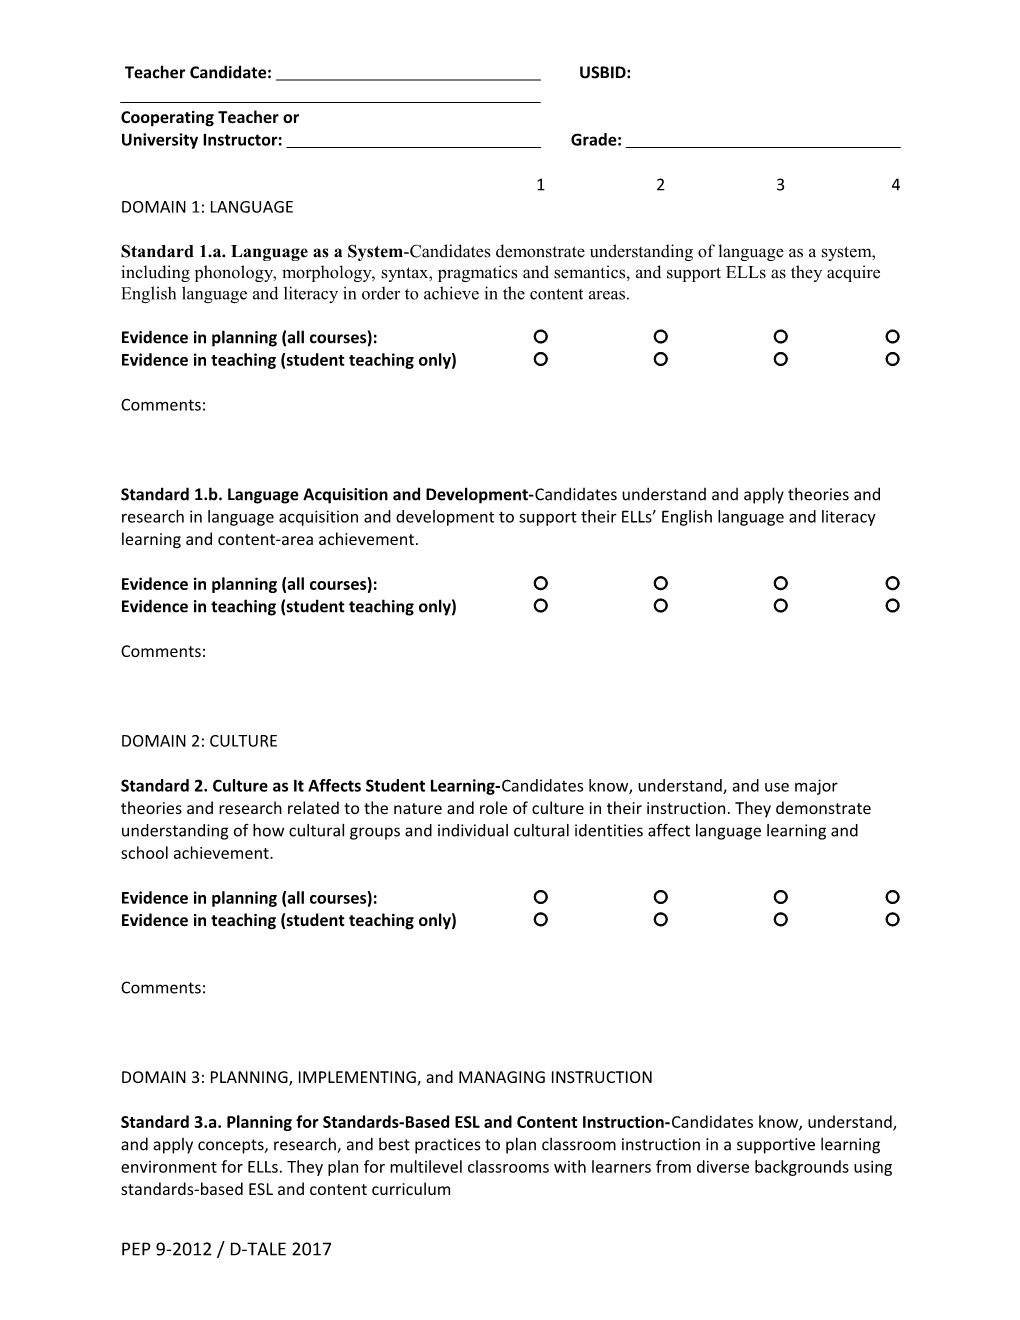 Tesol Disciplinary Standards Form (Dsf)